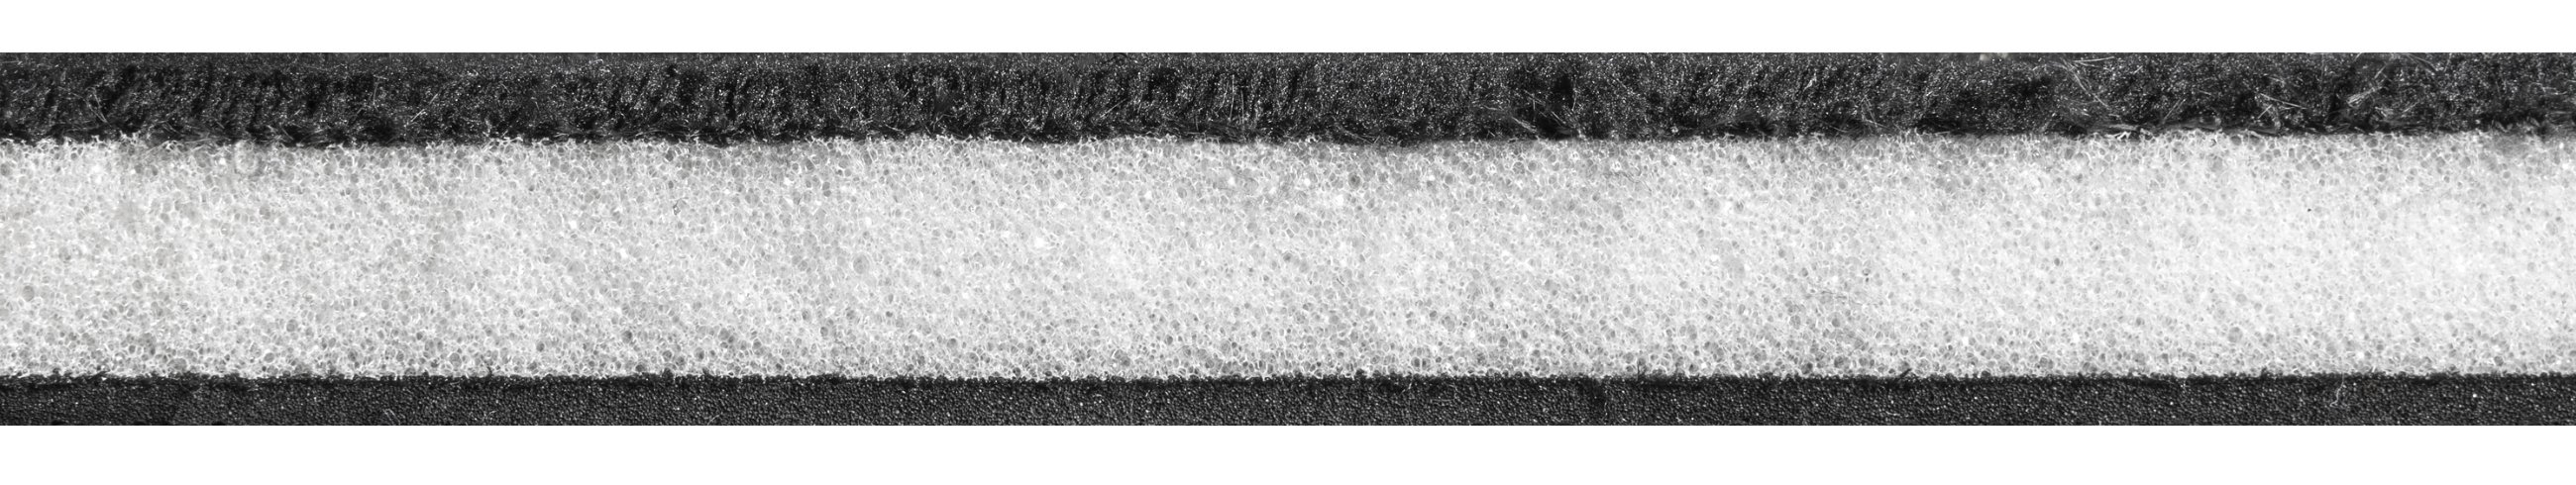 Auto Comfort Tapijt 8mm velours, universele vloermatten, auto matten set 4 stuks zwart, auto matten velours zwart